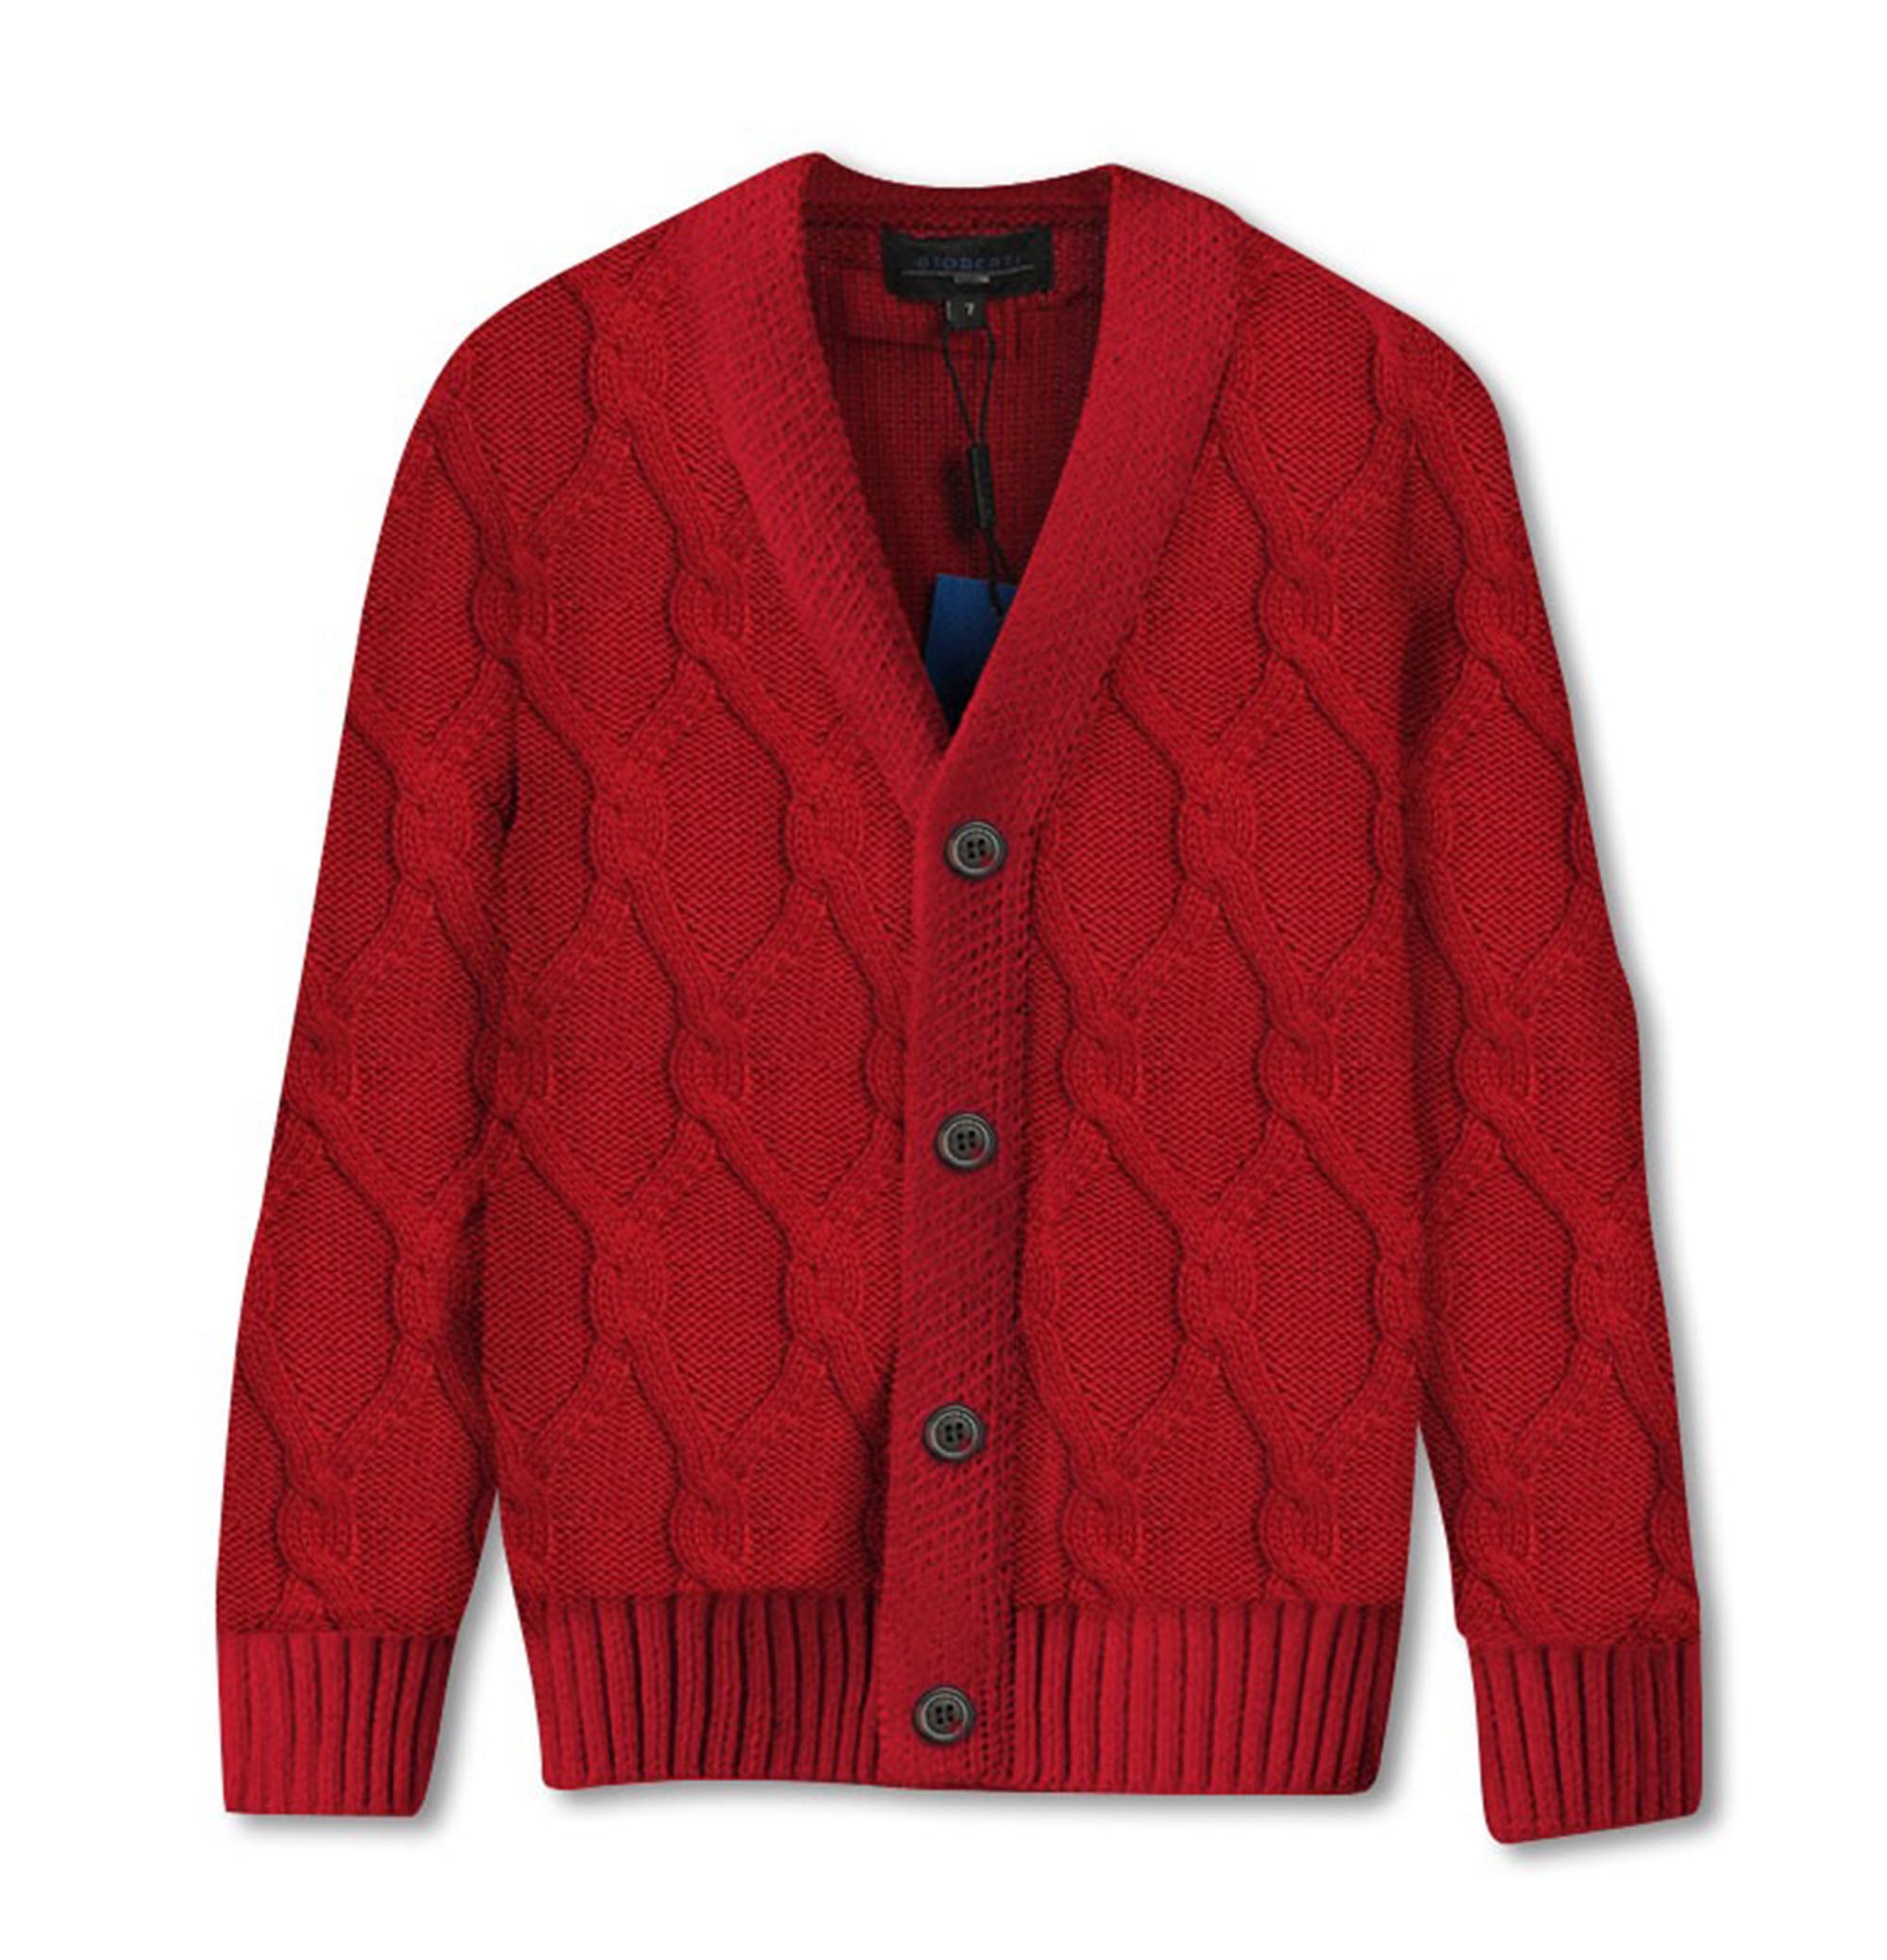 JGJSTAR Toddler Boys V-Neck Knit Cardigan Sweater Cotton Casual School Uniforms 3-7 Years 